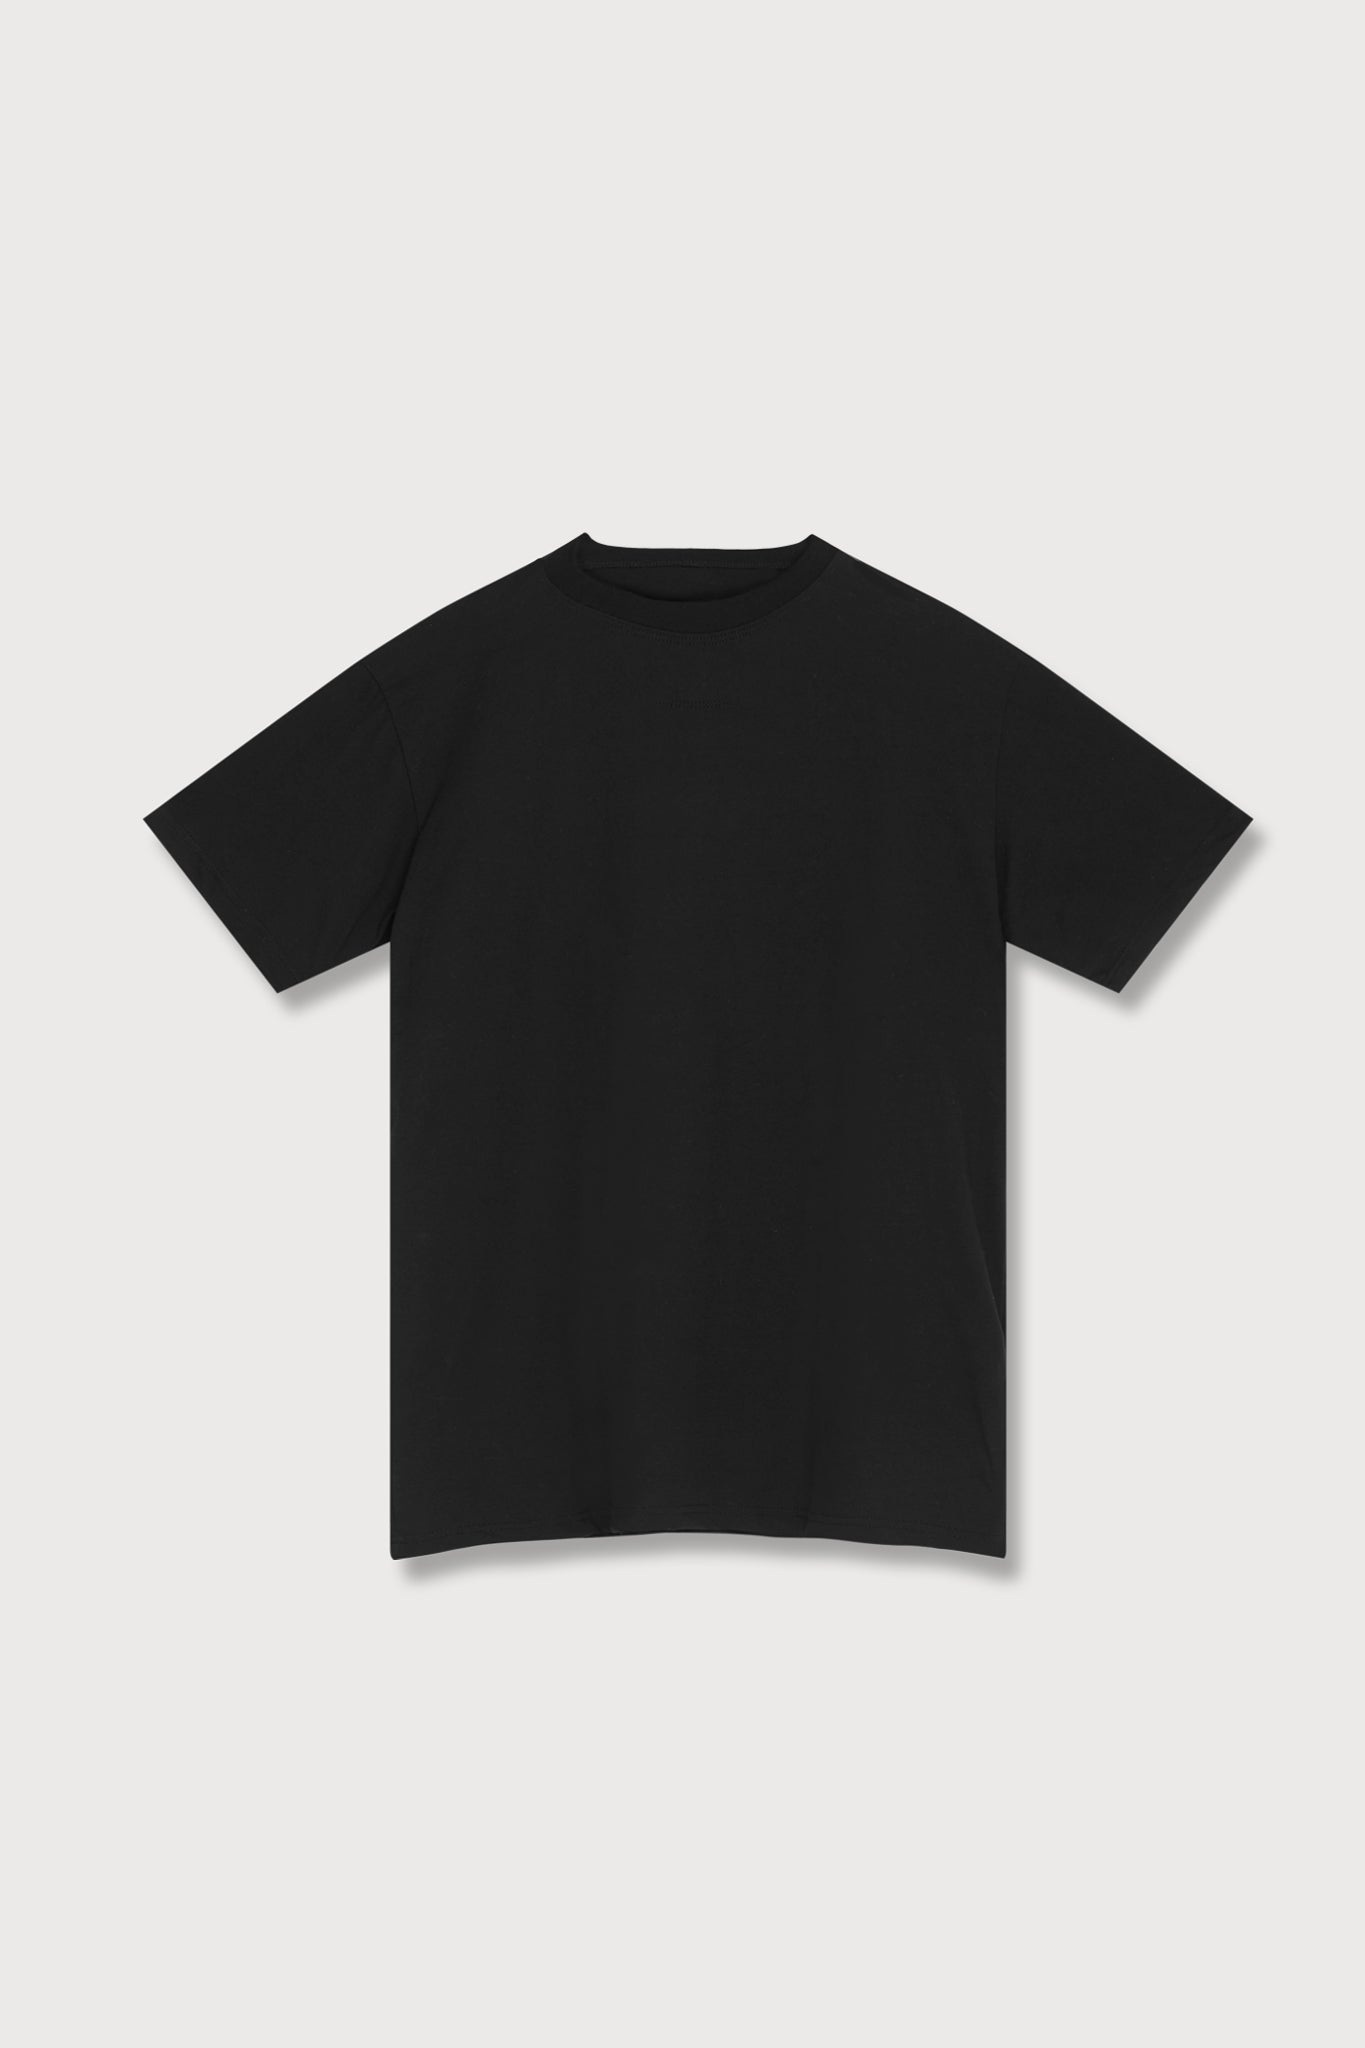 A.65 Black High Crew T-Shirt in Organic Cotton